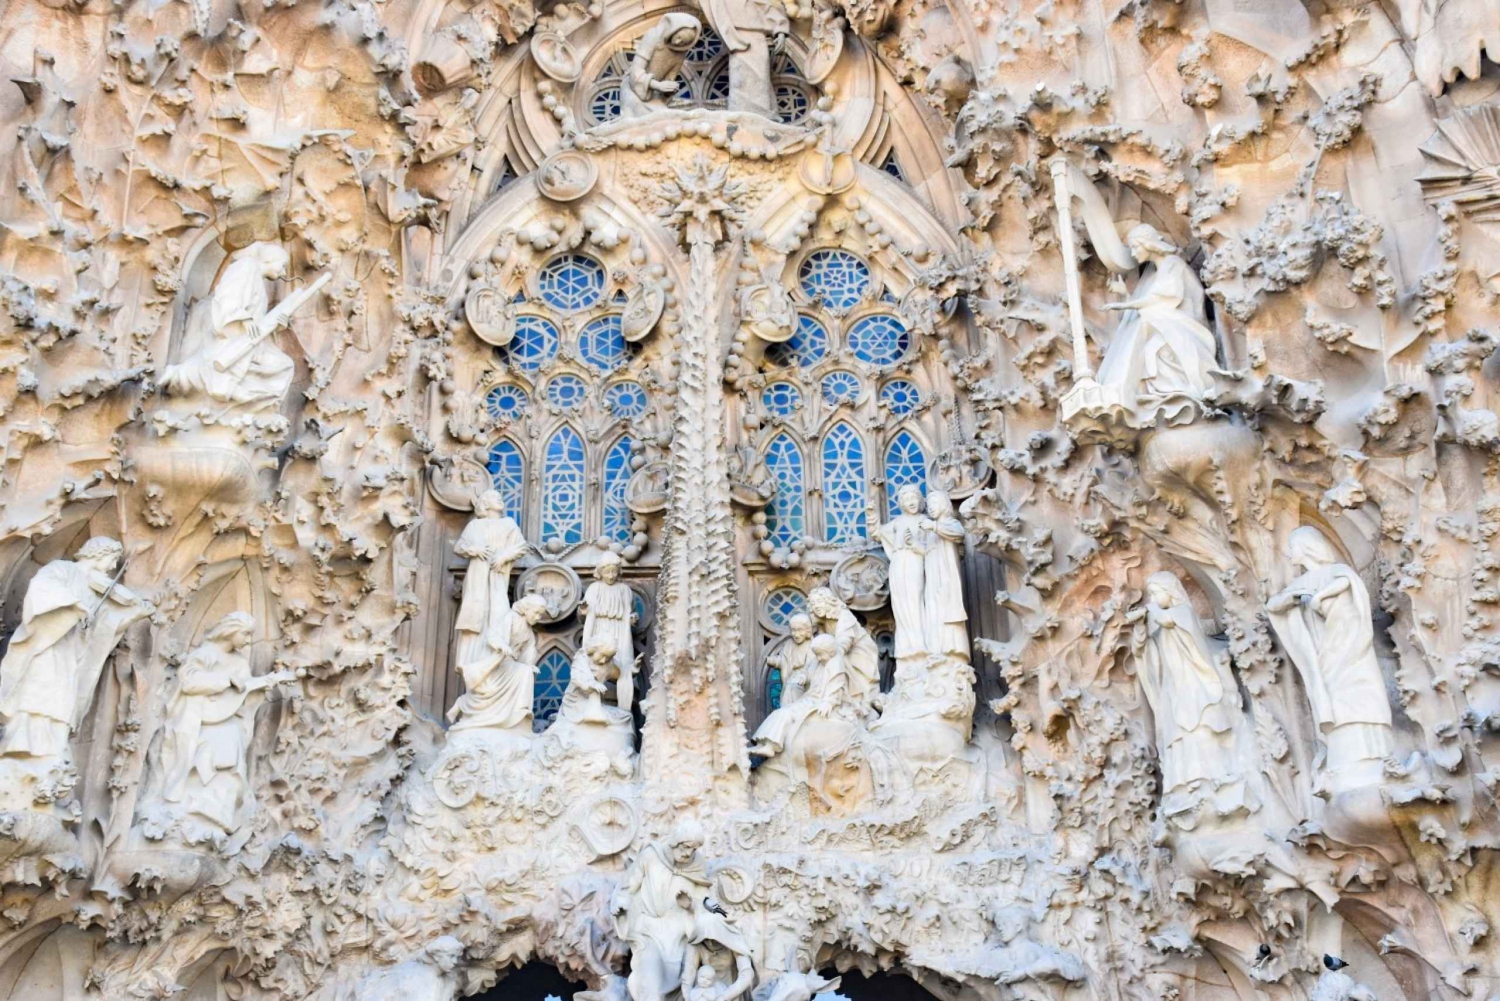 Barcelona: Fast-Track Sagrada Familia and Towers -opastettu kierros